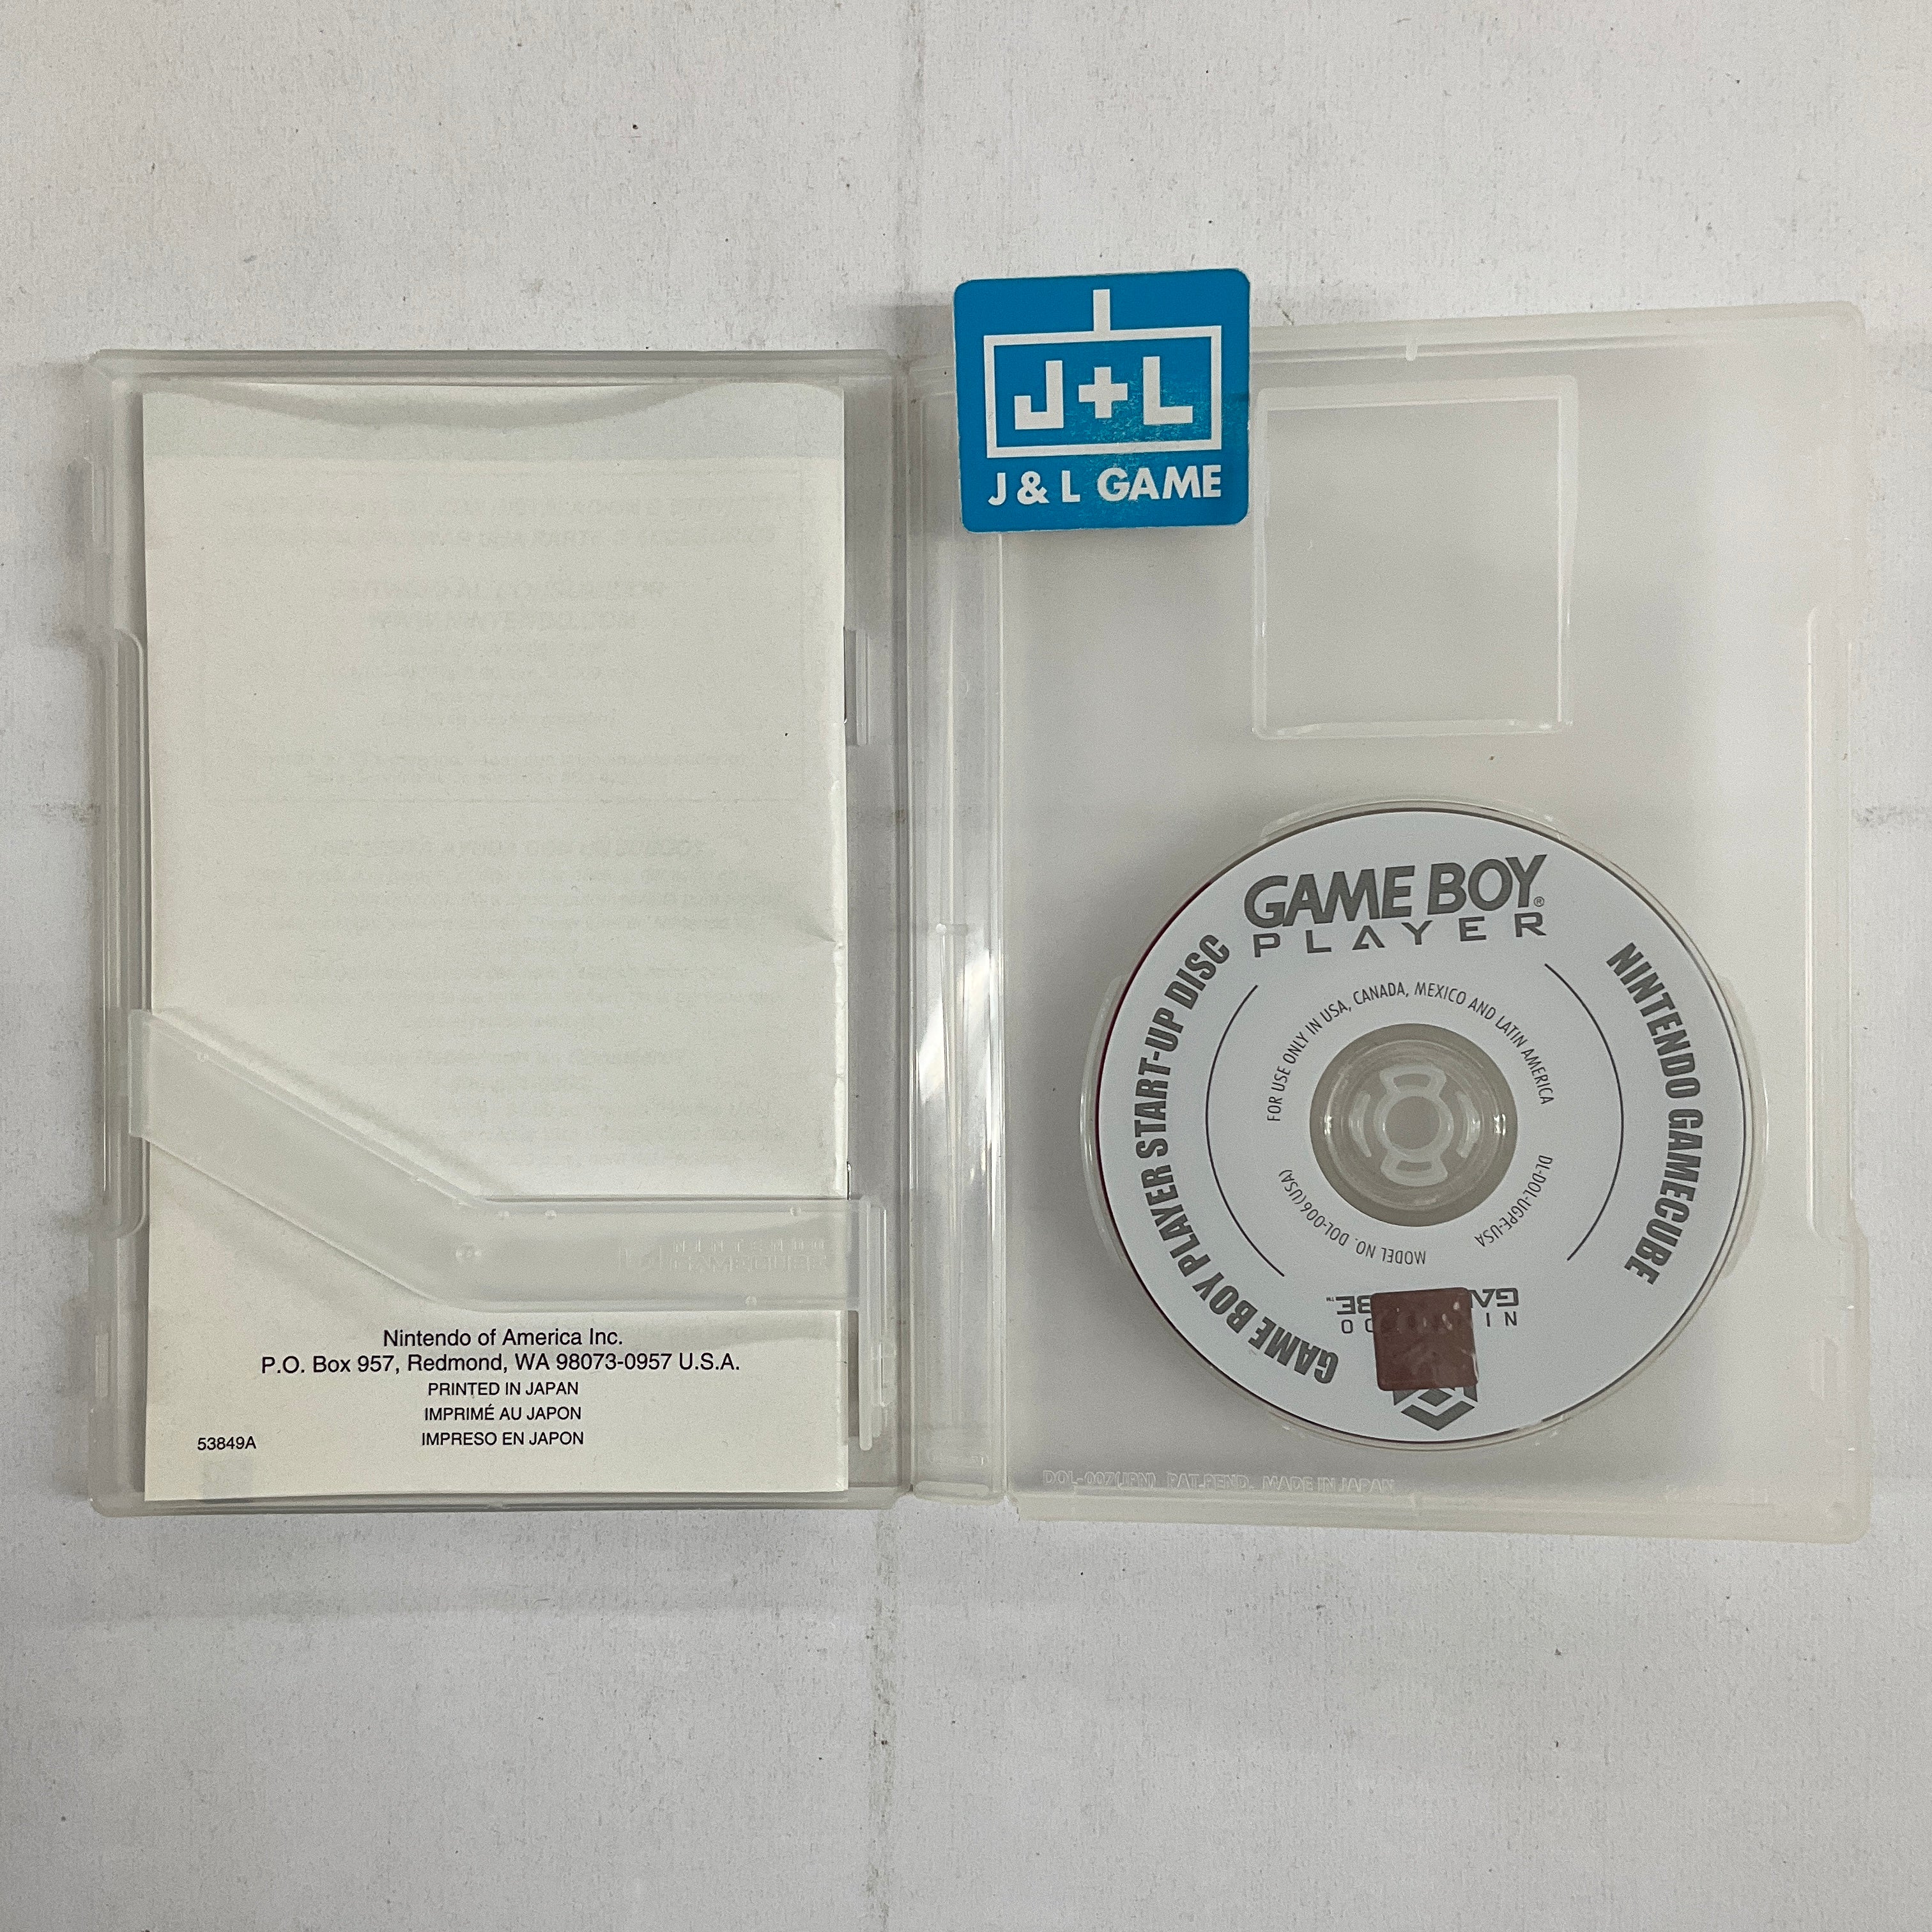 Nintendo Game Boy Player (Black) - (GC) GameCube [Pre-Owned] Video Games Nintendo   